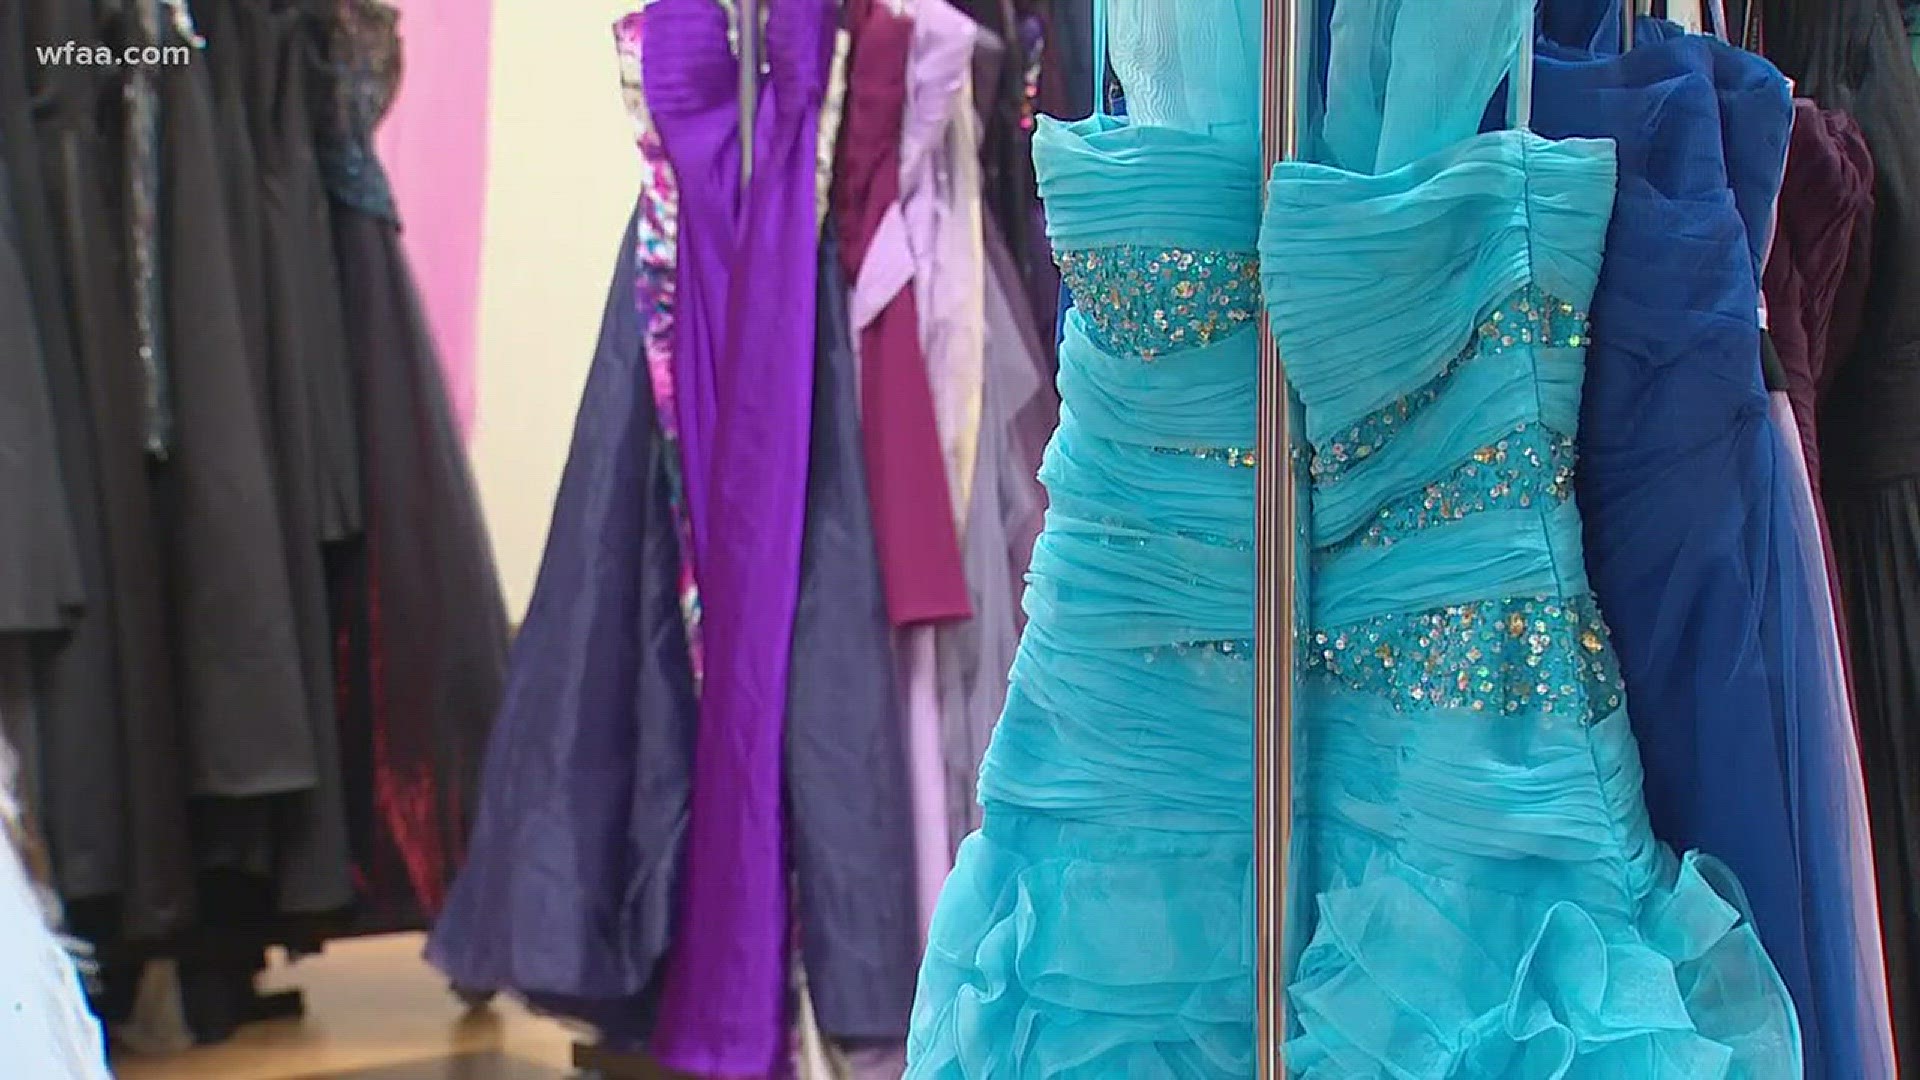 "Fairytale closet" fulfills prom dreams